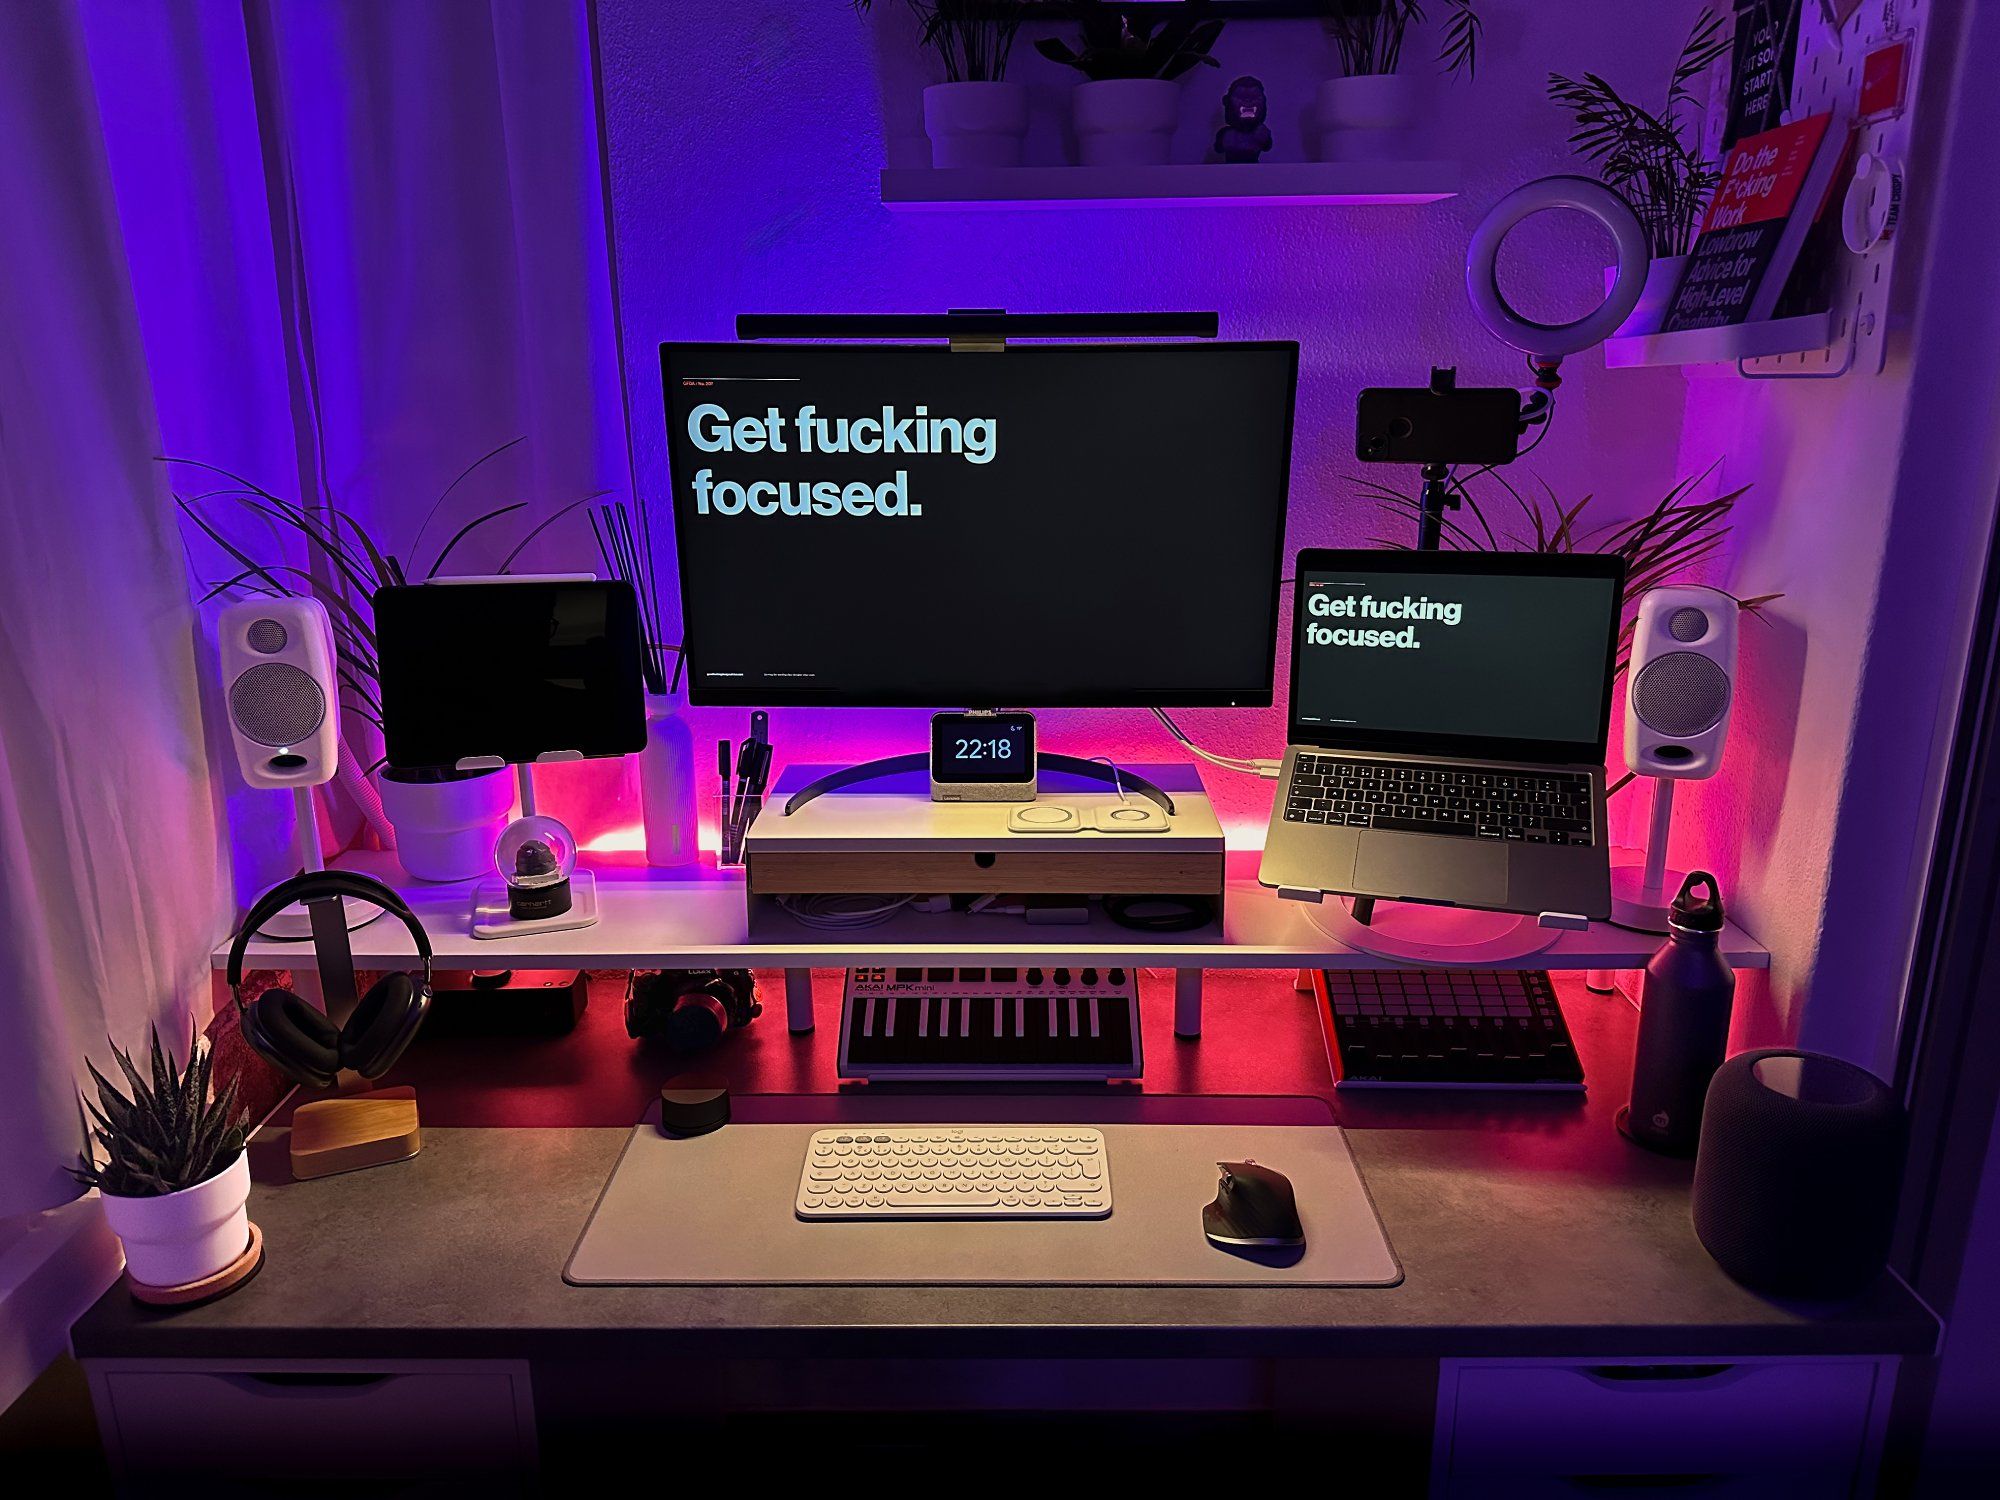 A neatly organised, LED-lit desk setup at night